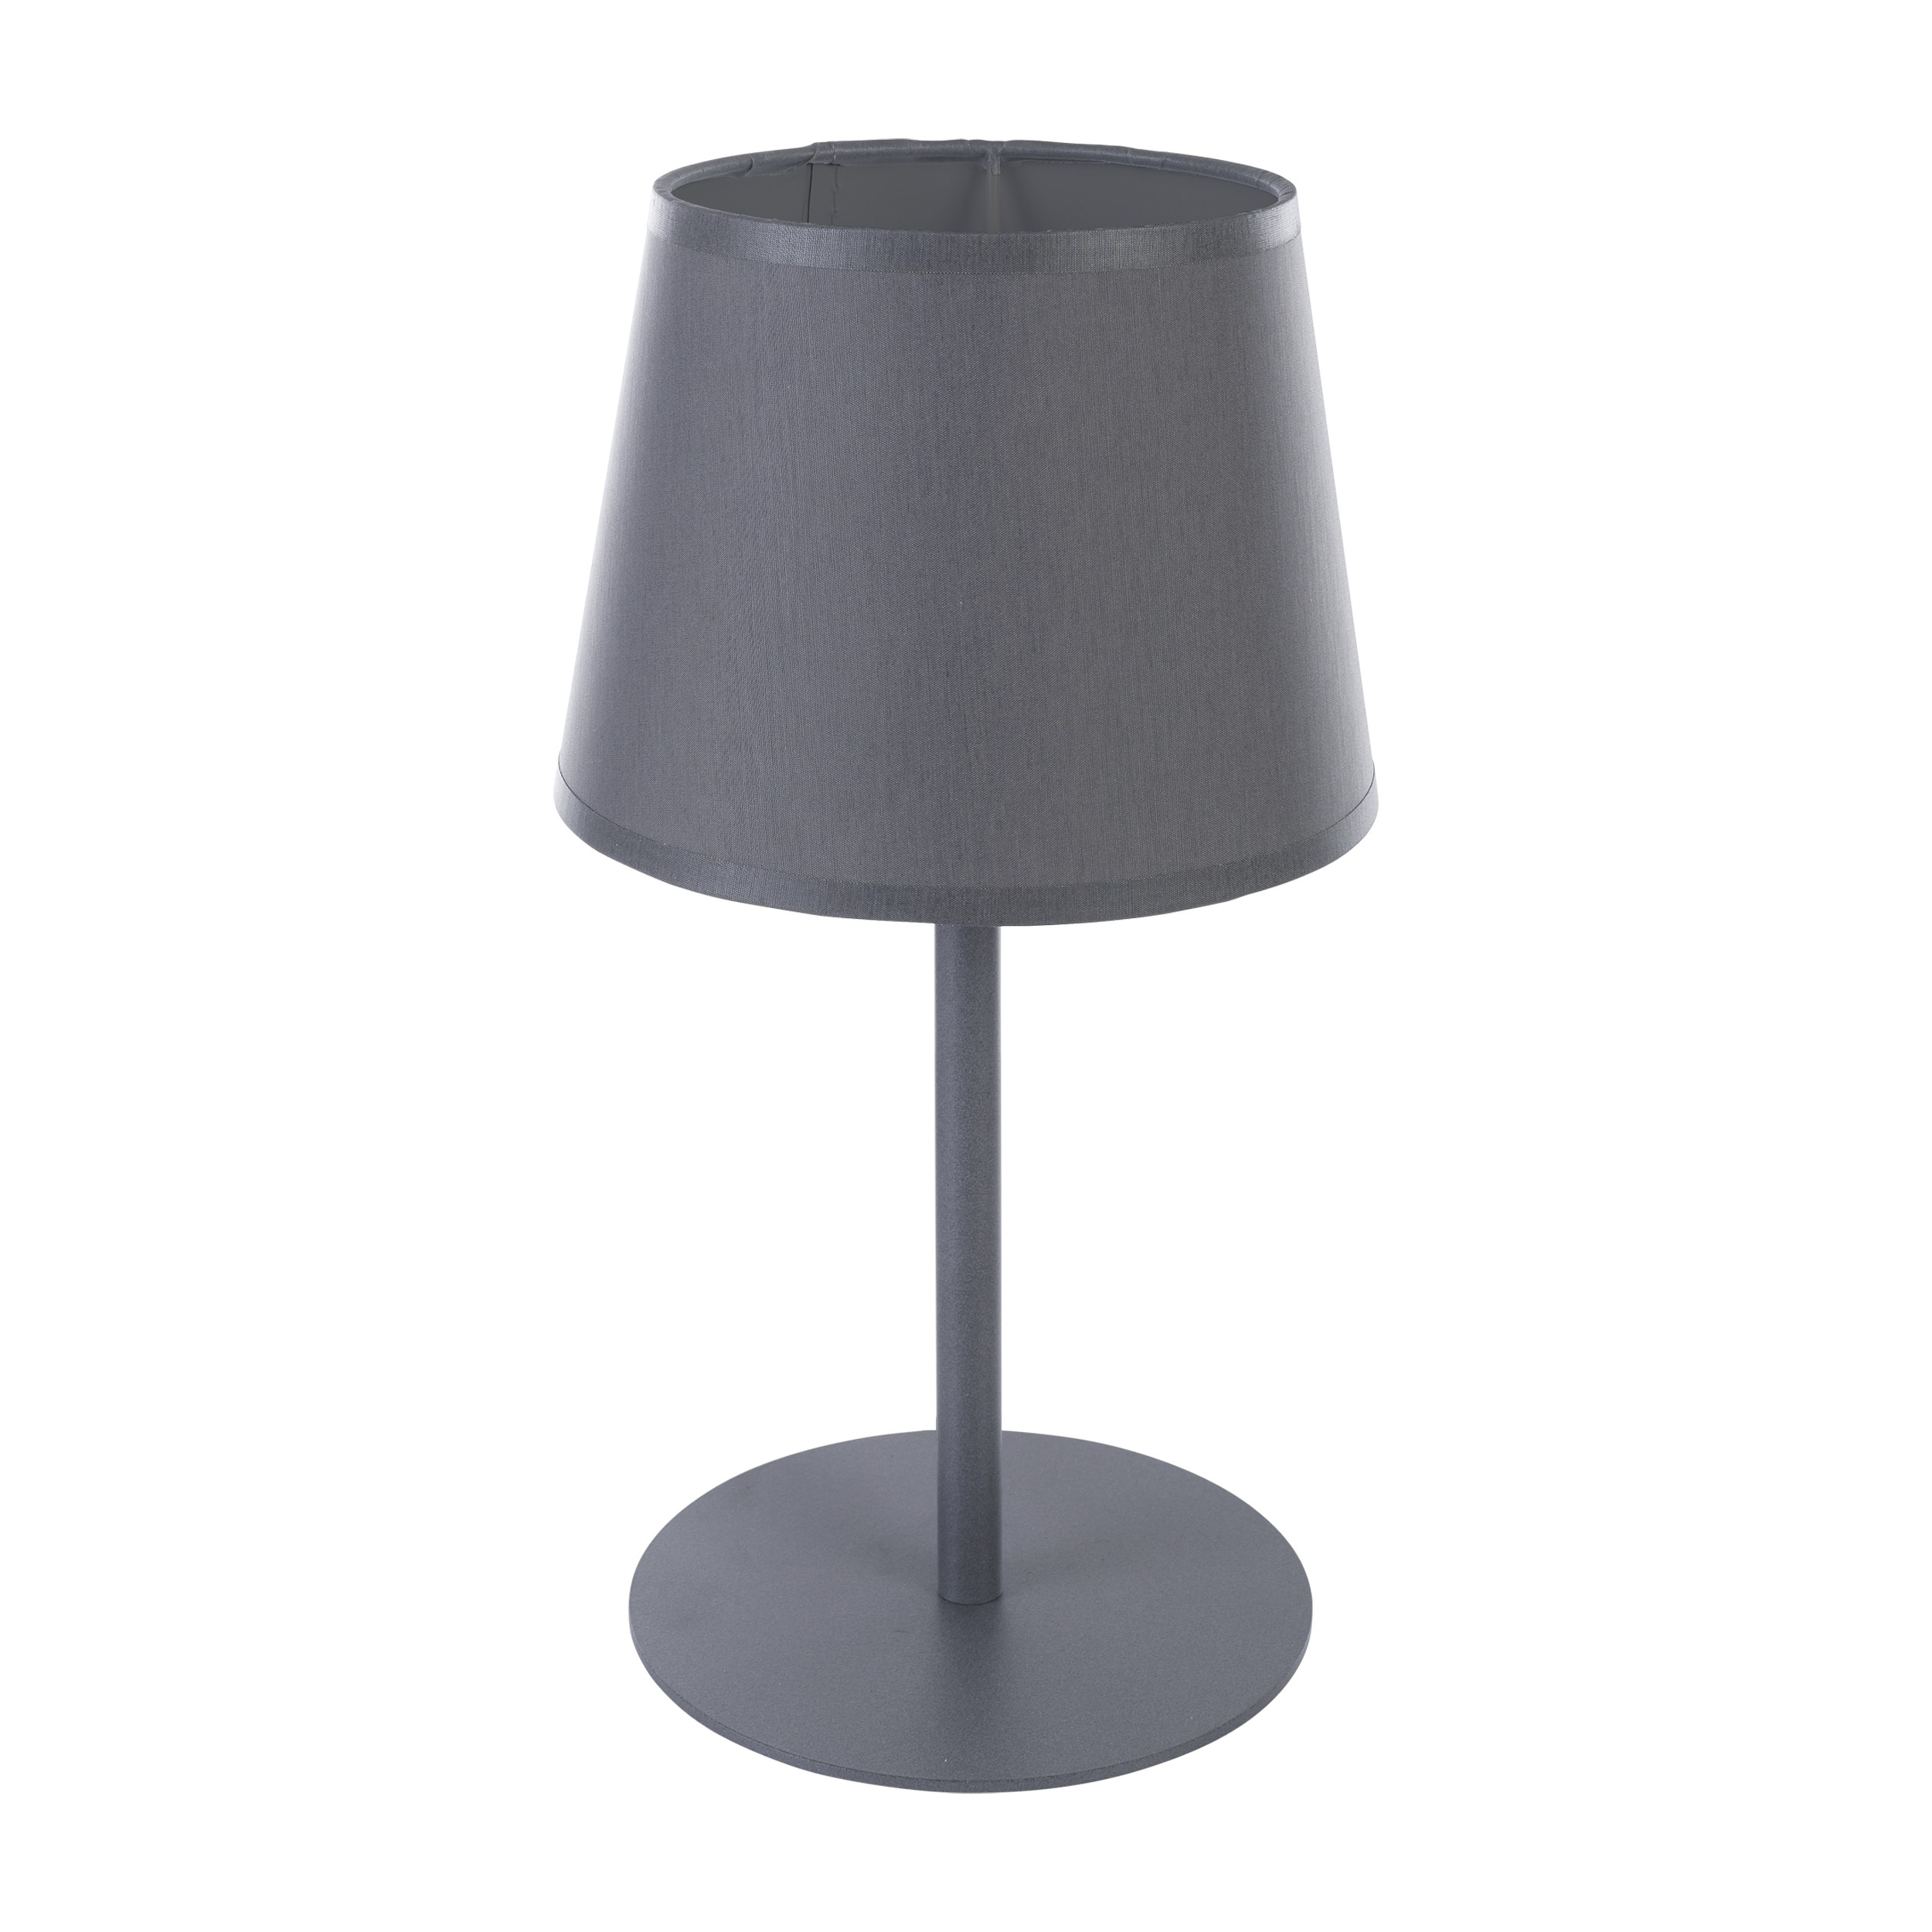 TK Maja bordlampe - grå stof og grå metal